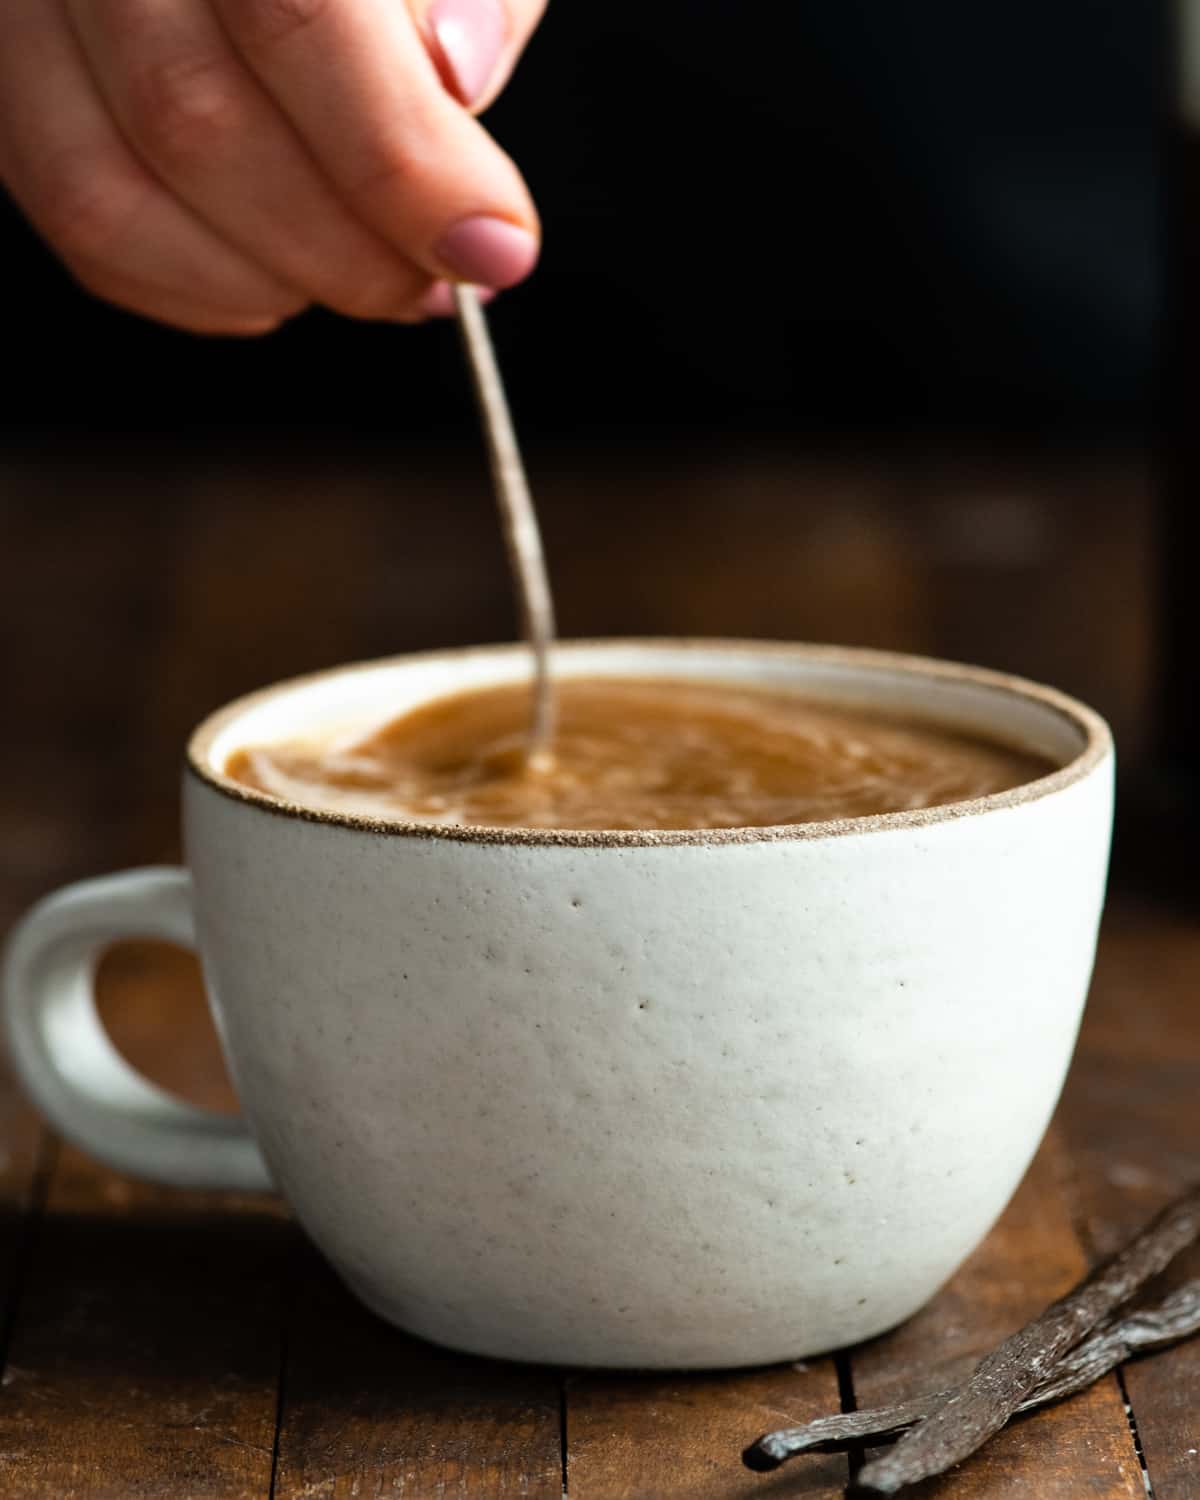 healthy coffee creamer being stirred into a mug of coffee